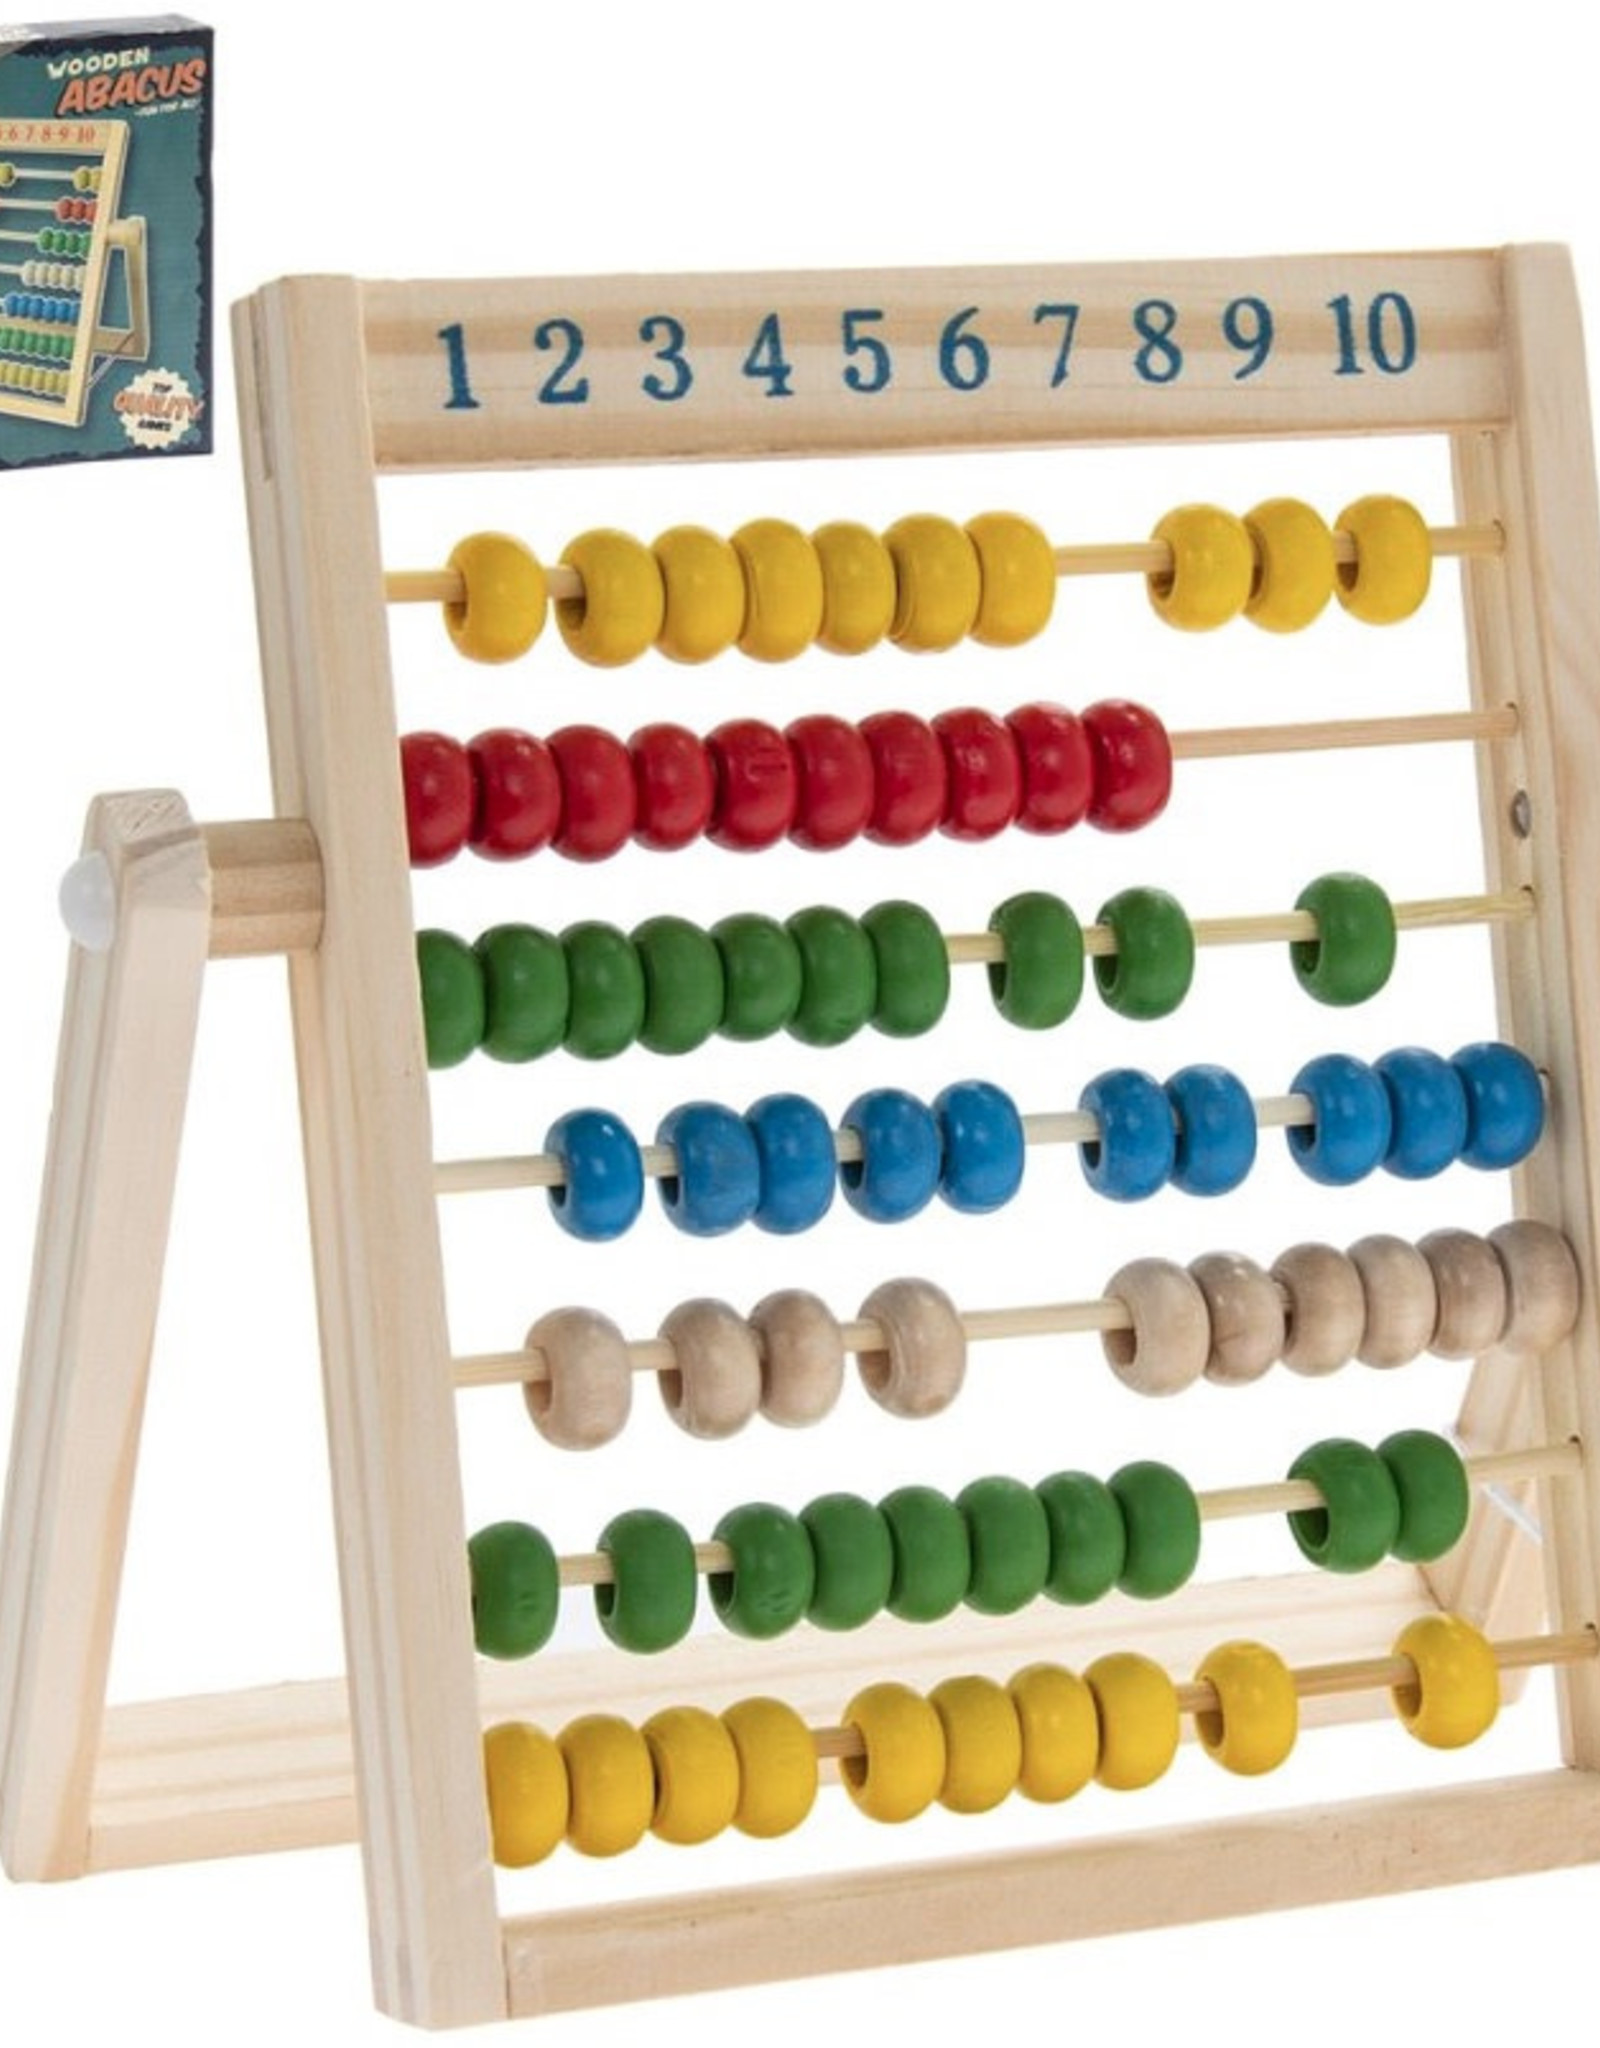 Retro wooden Abacus